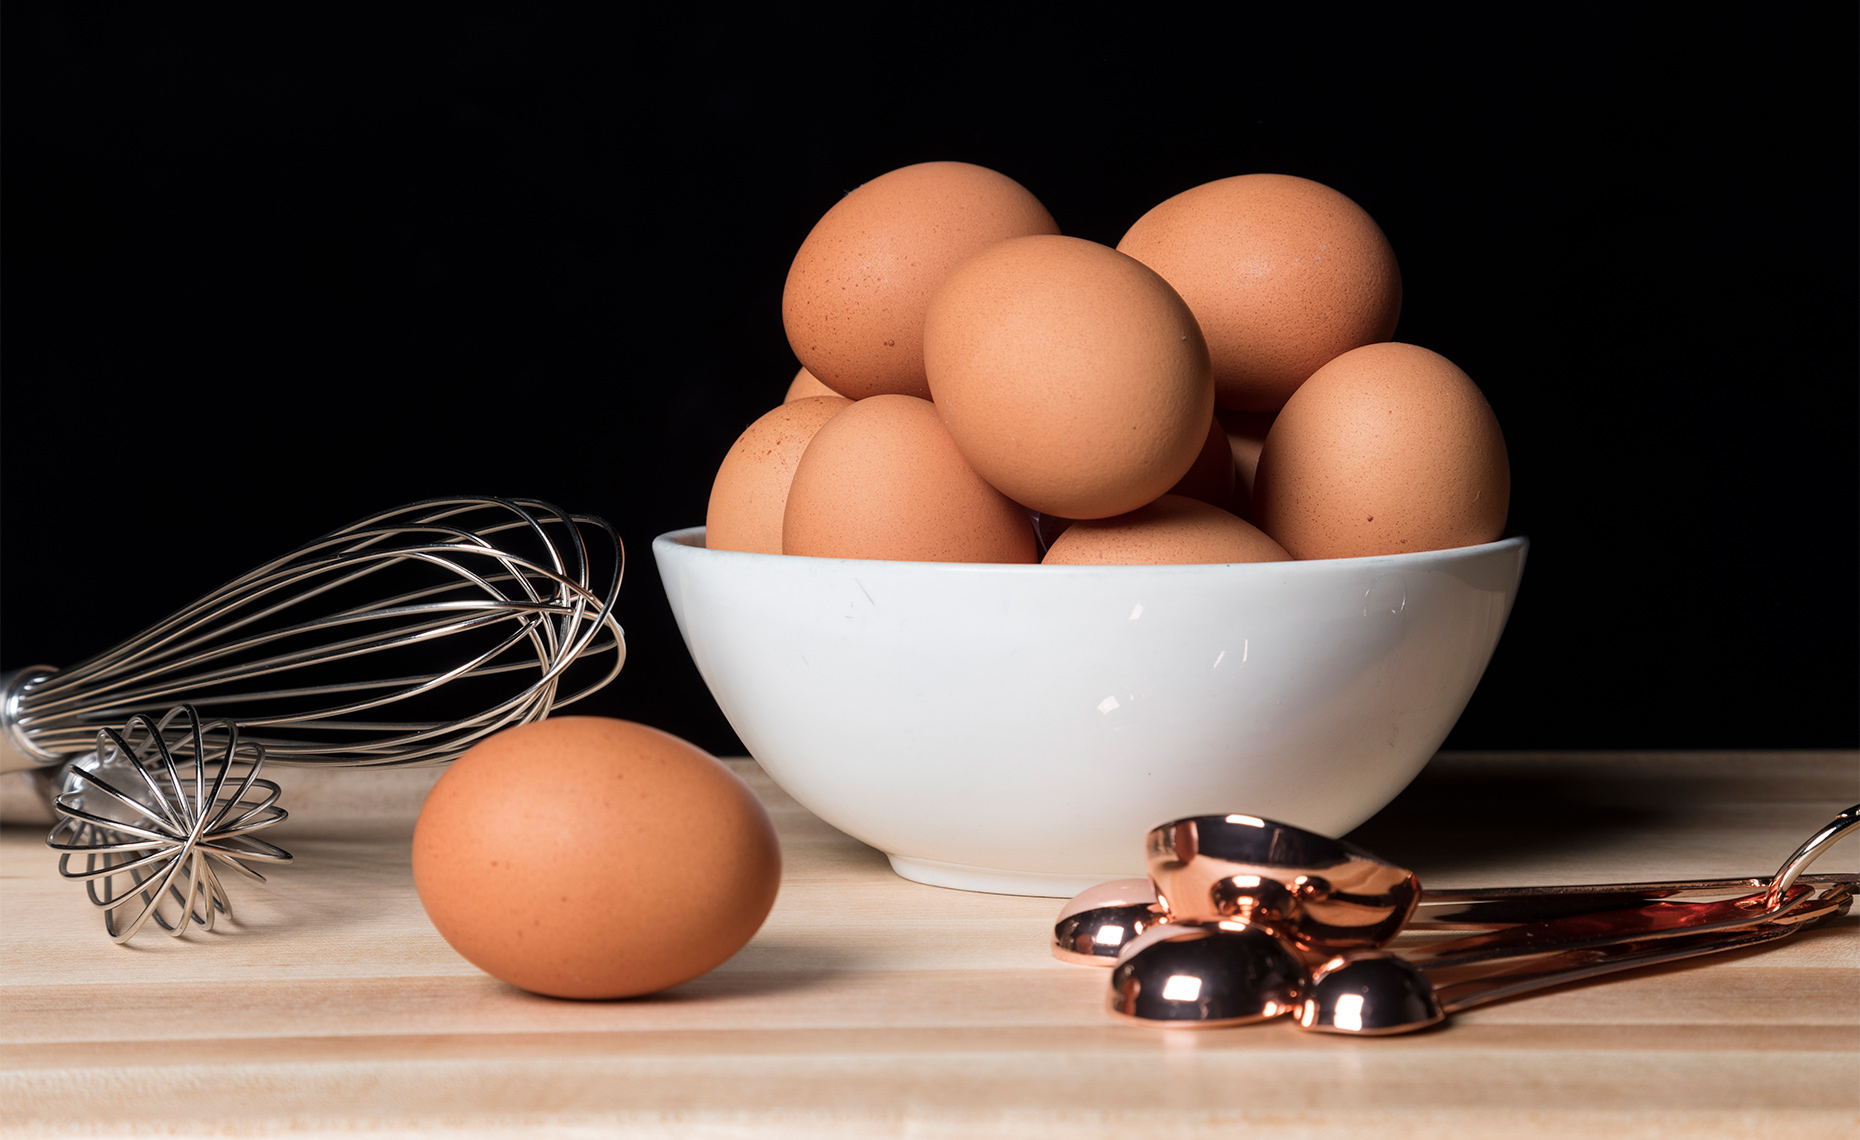 Eggs in a ceramic white bowl